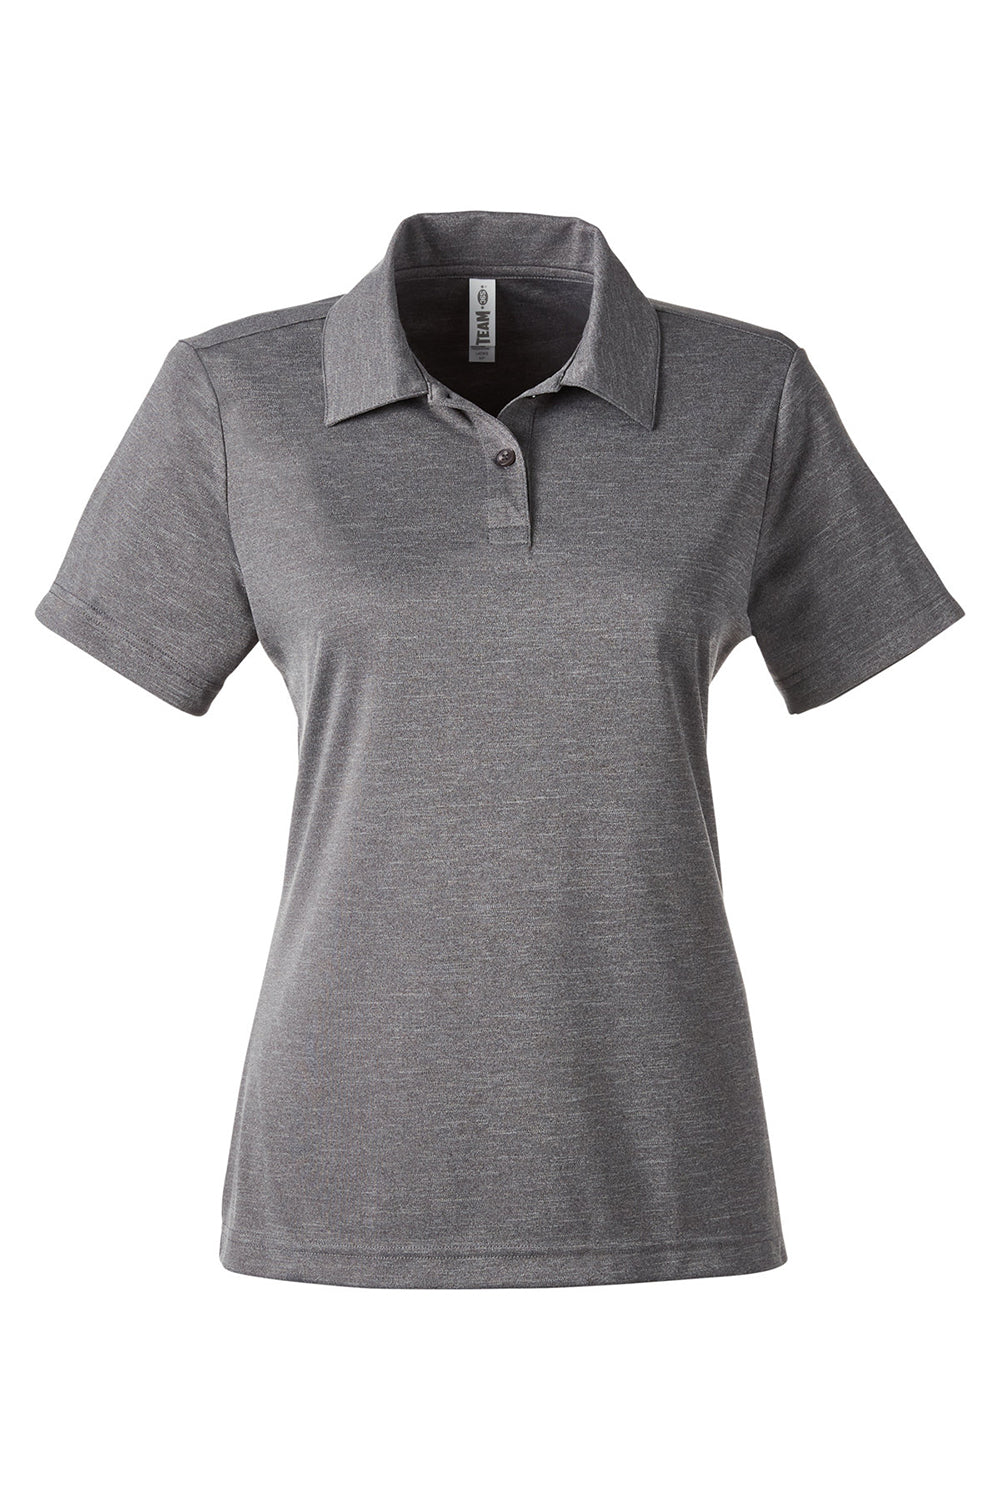 Team 365 TT51HW Womens Zone Sonic Moisture Wicking Short Sleeve Polo Shirt Heather Dark Grey Flat Front